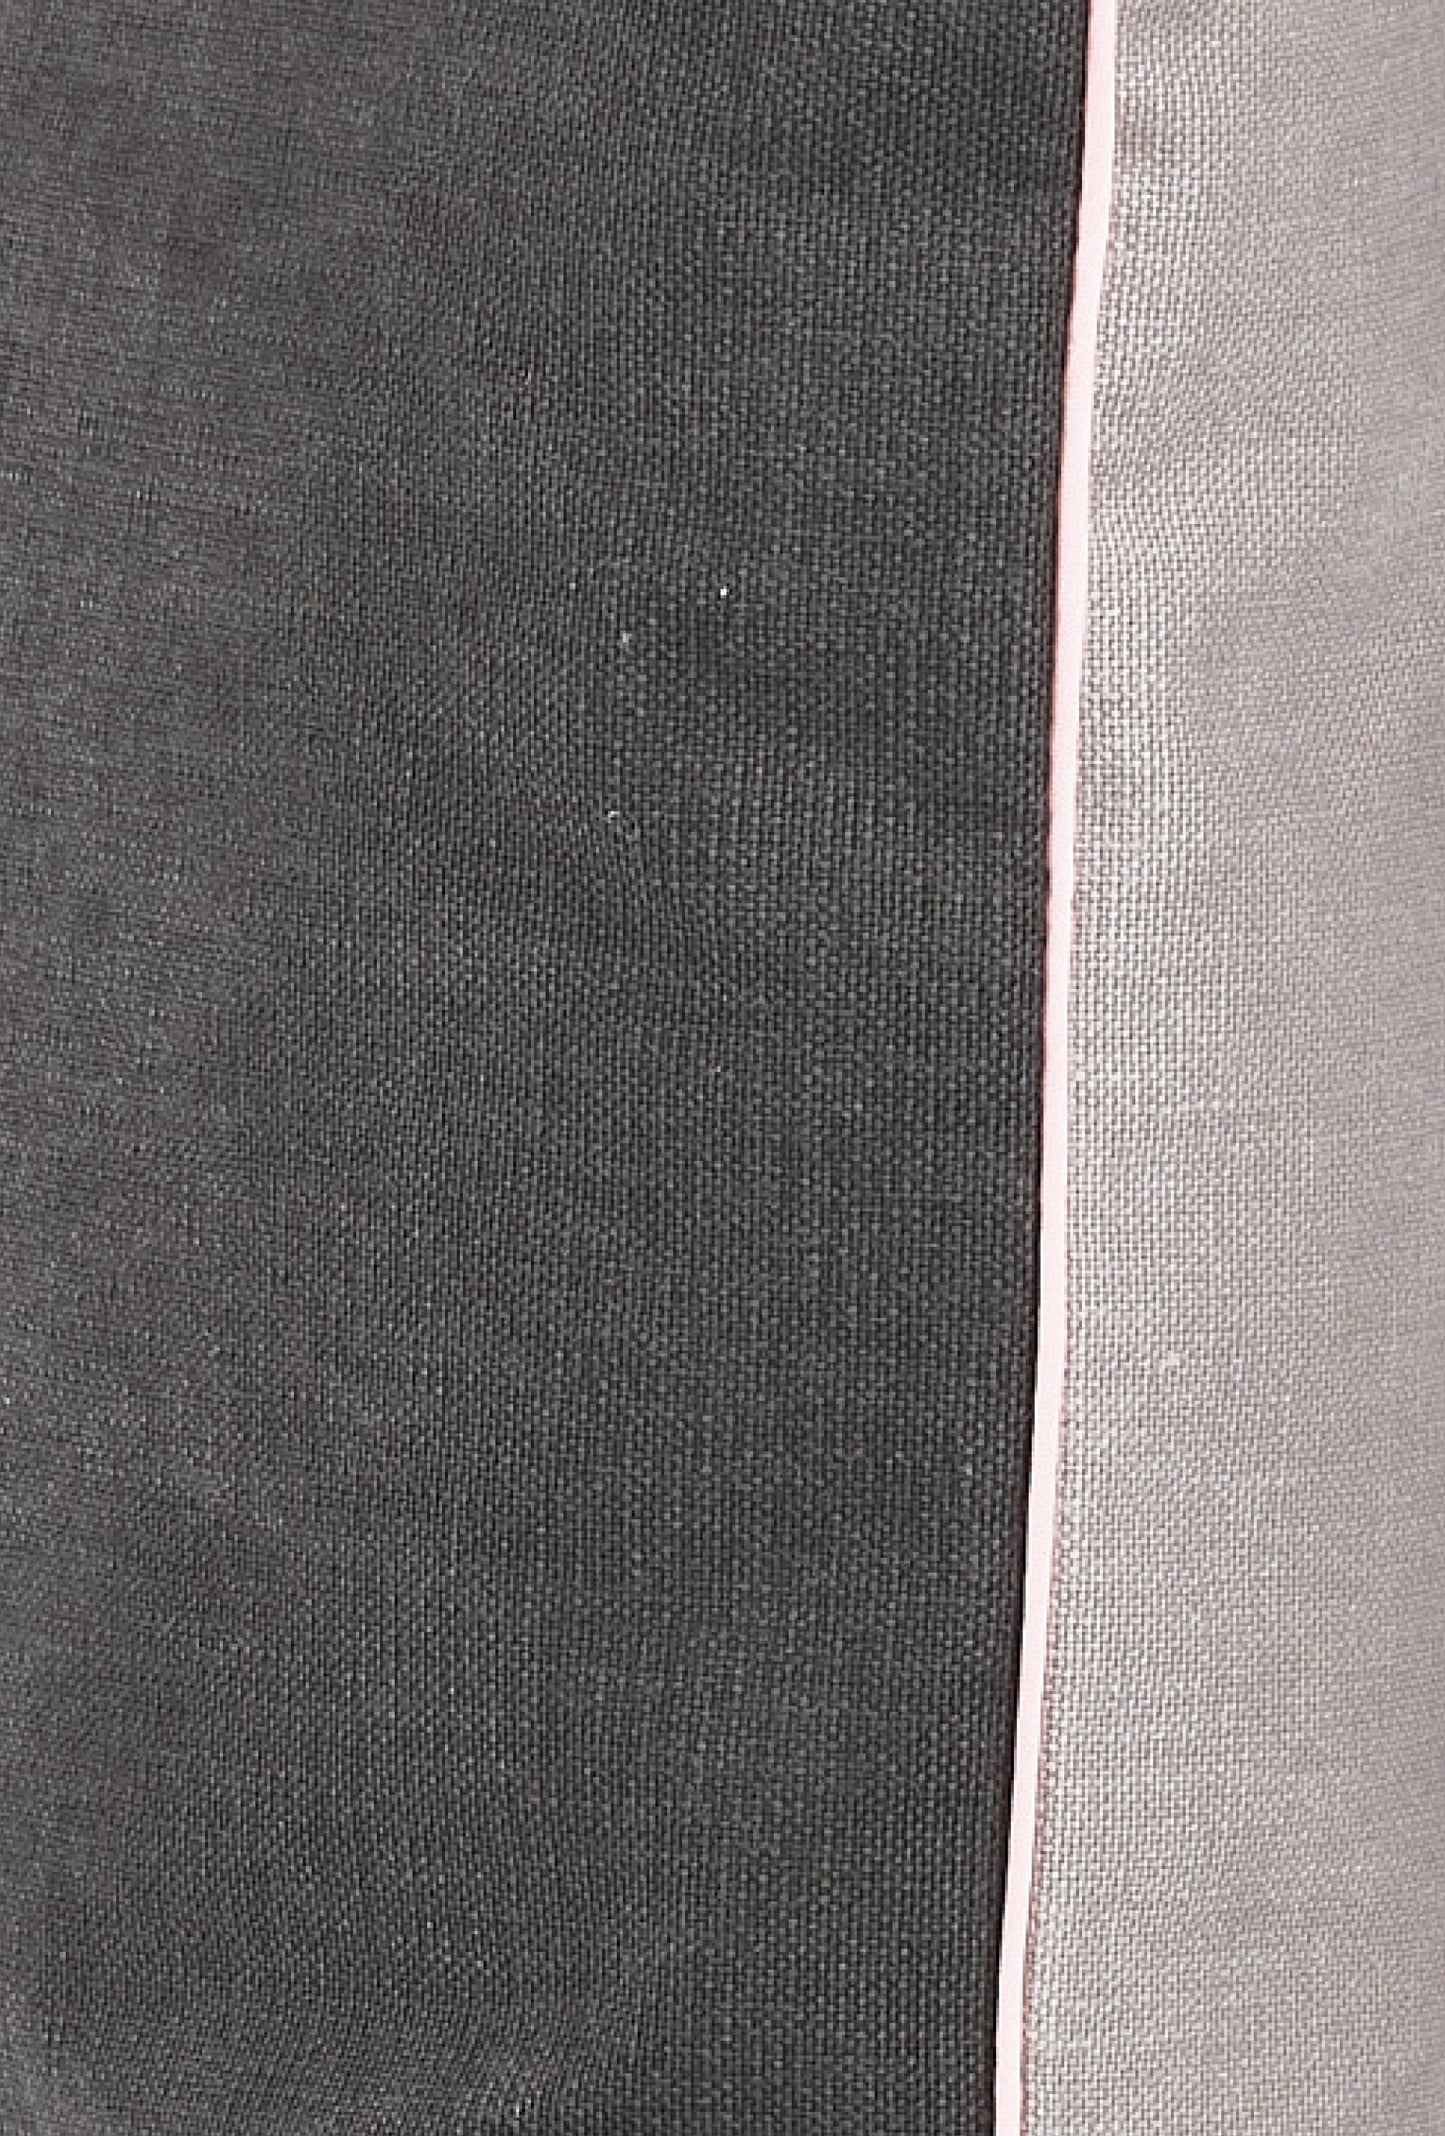 KATHRINE Brushed cotton decorative cushion - Dark Grey / Sandy (42x42)